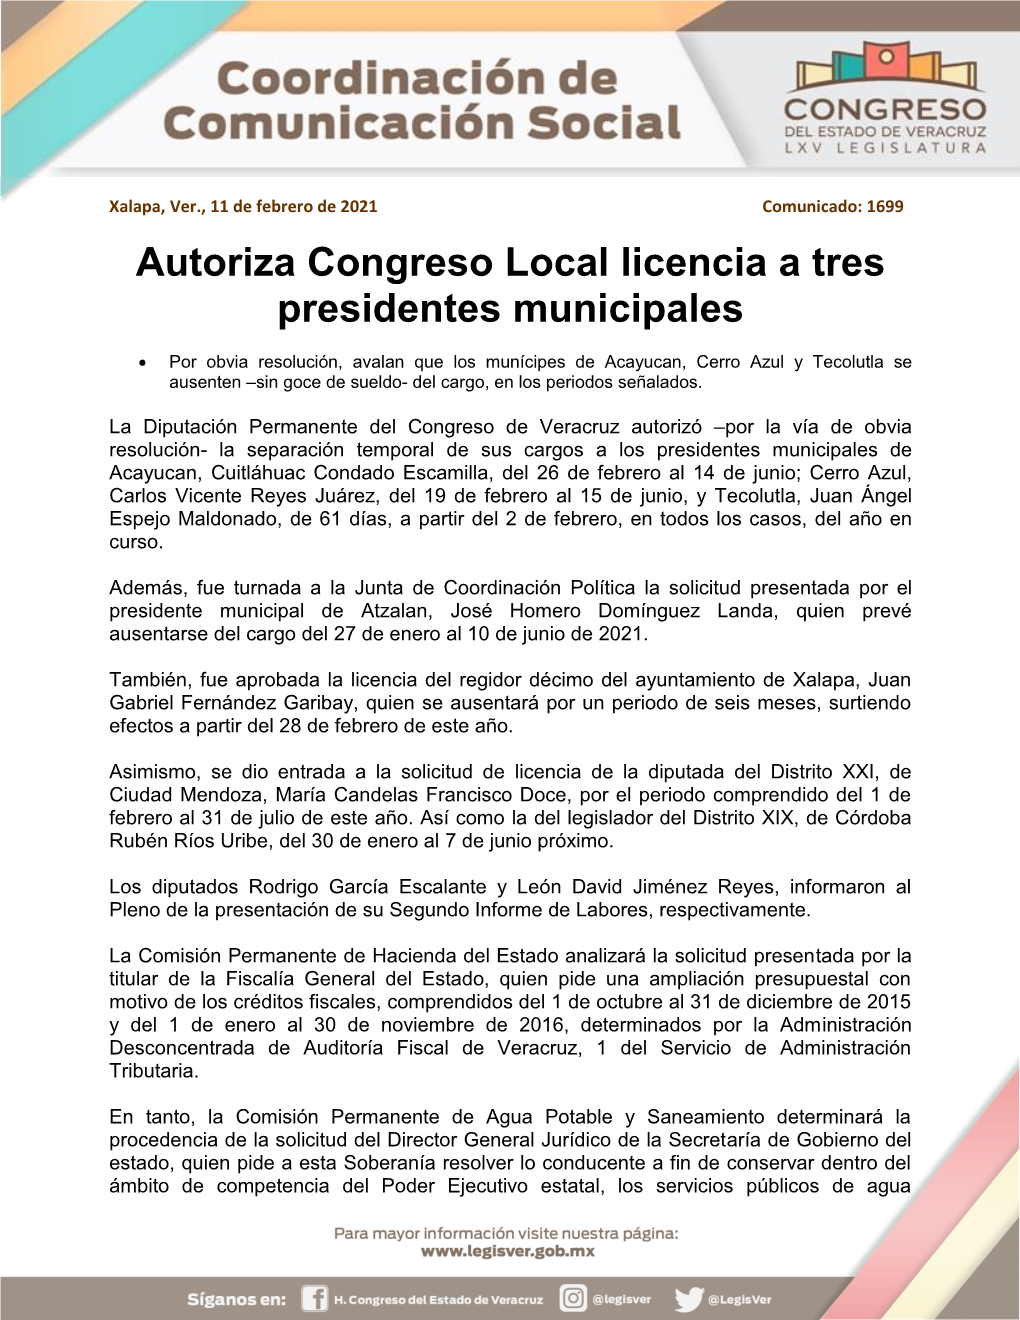 Autoriza Congreso Local Licencia a Tres Presidentes Municipales